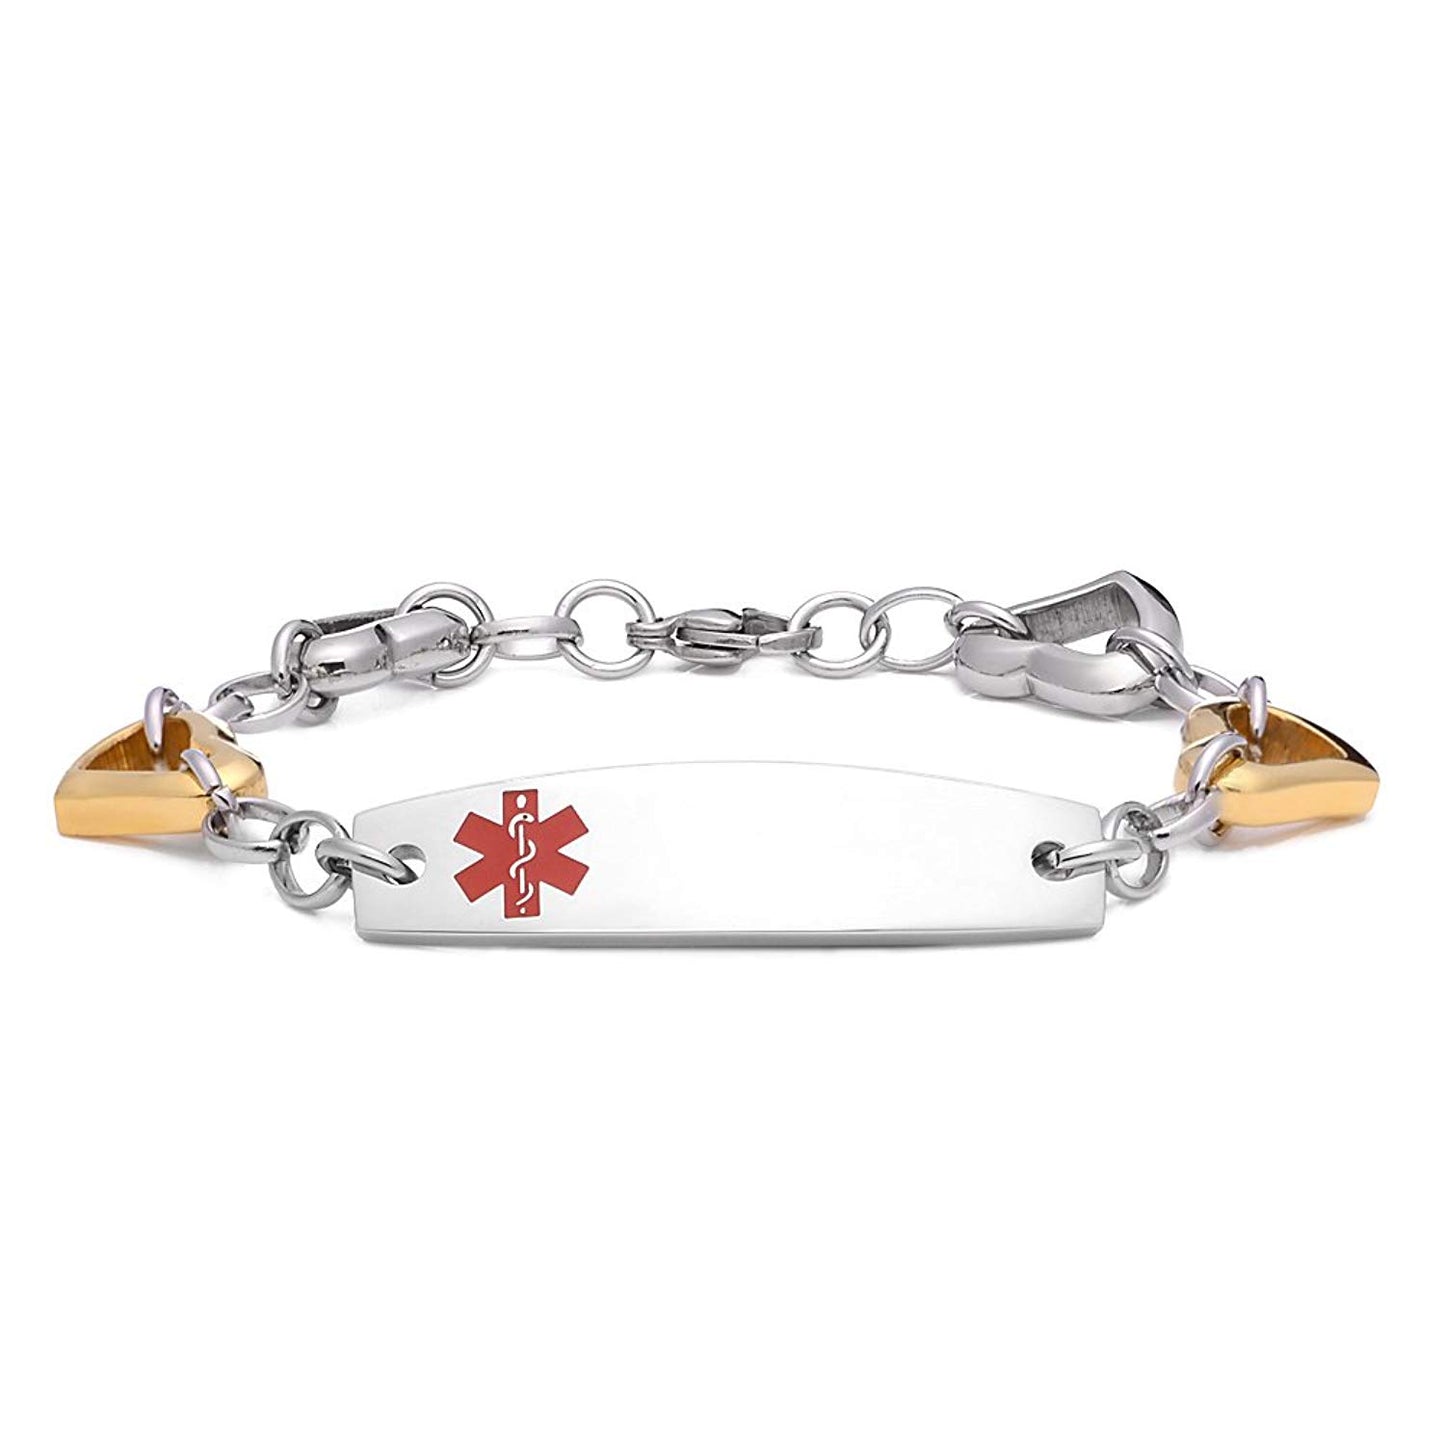 Tarring Free engraving Creativity Heart Medical alert id bracelets for Women & Girls